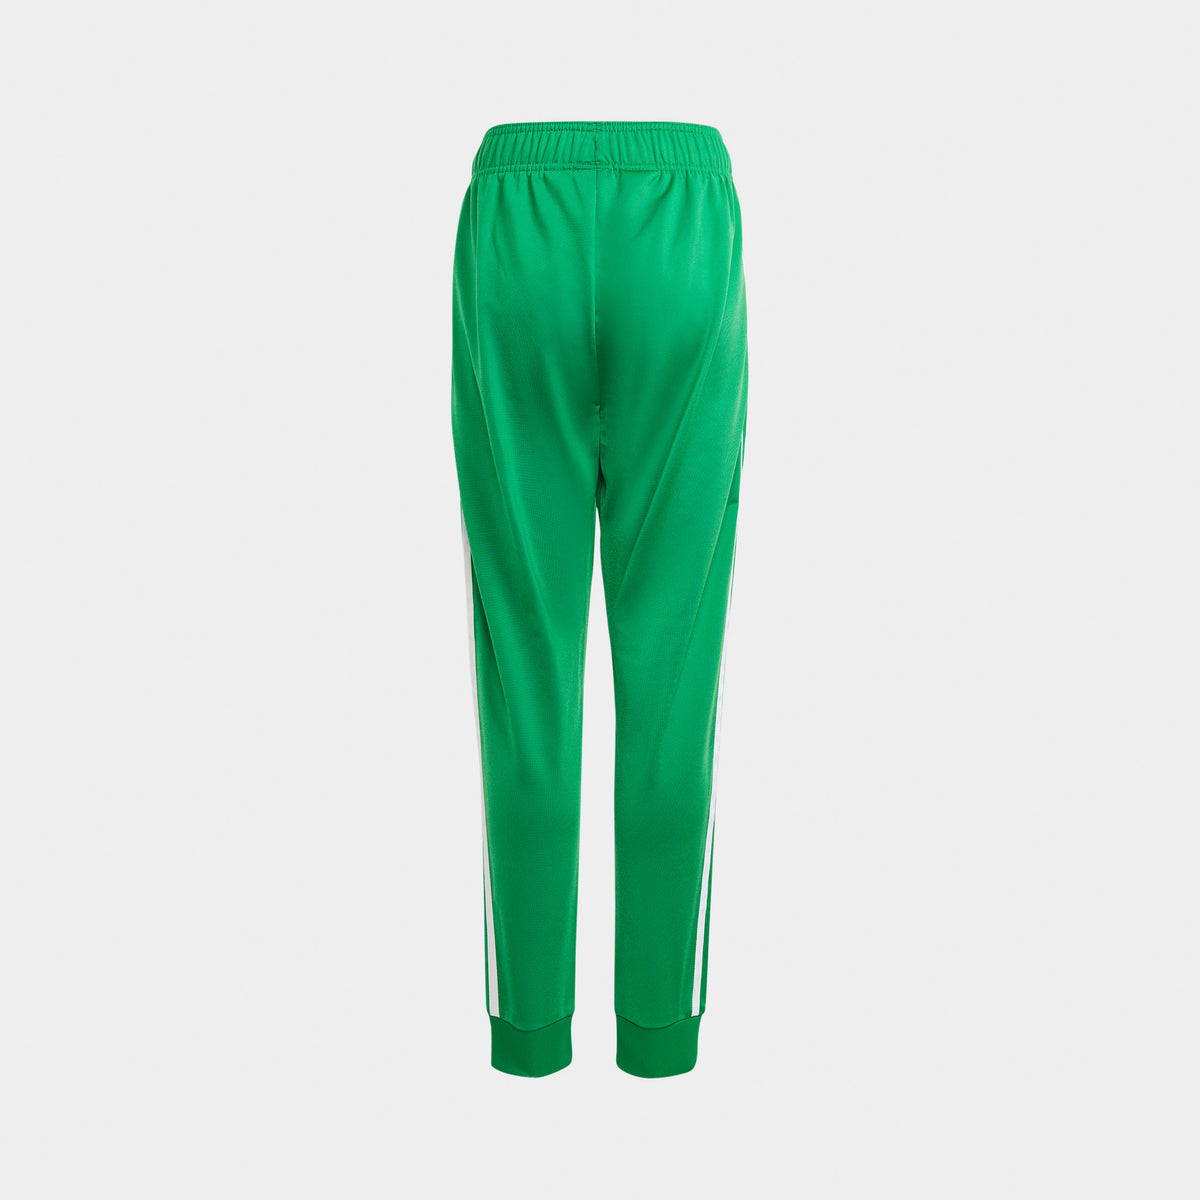 Adidas Originals Superstar Track Pants - green